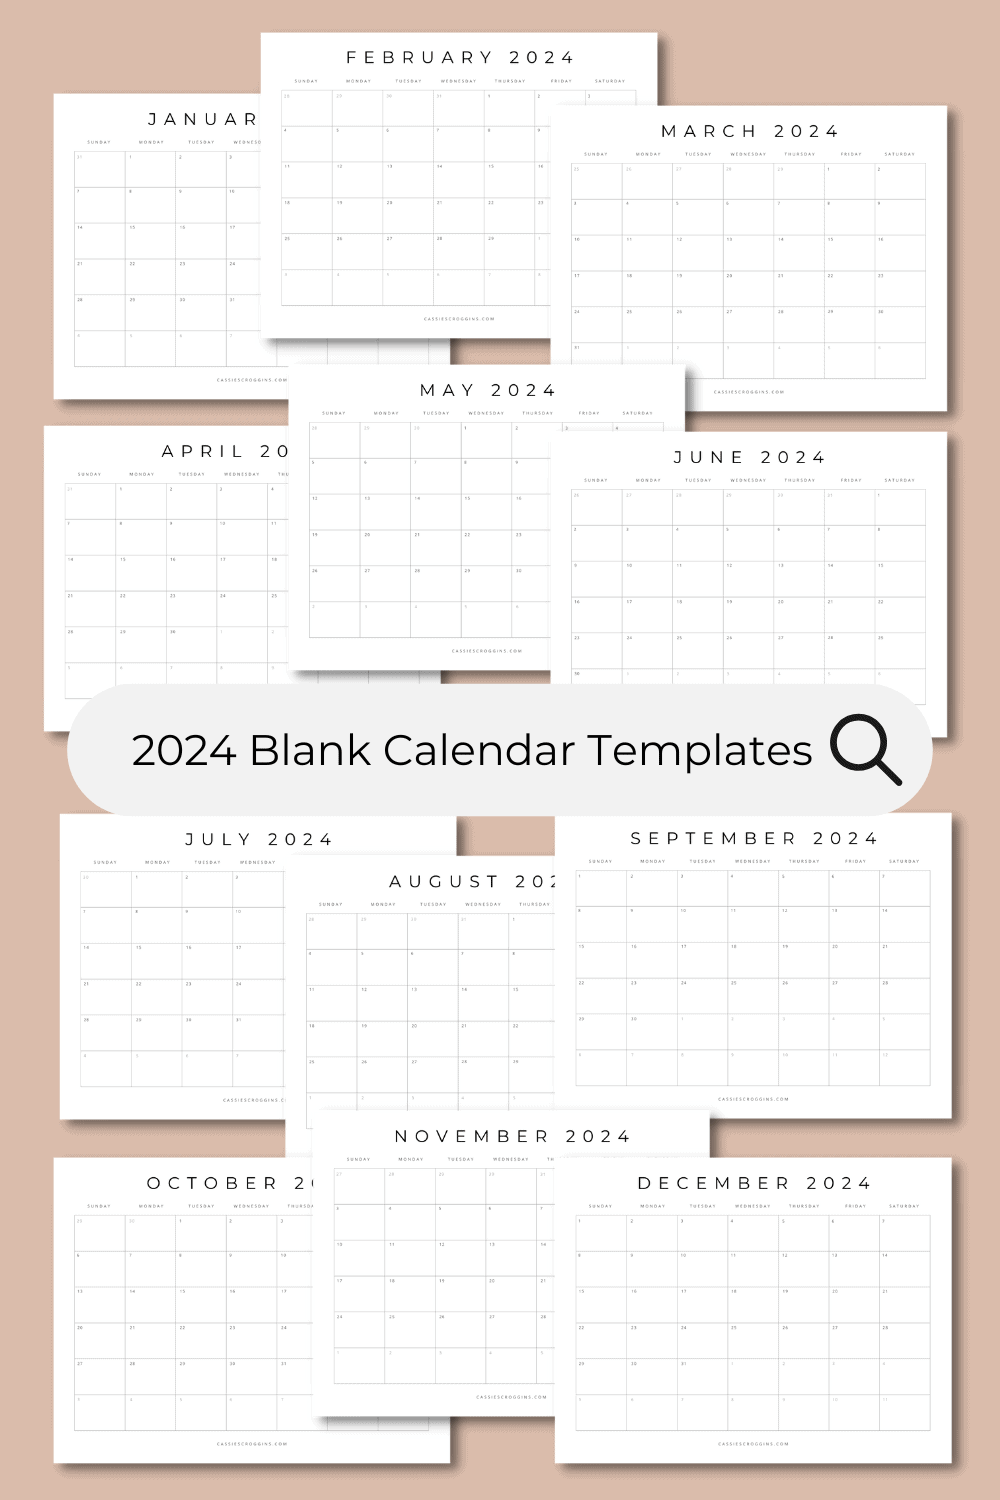 Free Printable 2024 Blank Calendar Templates (All 12 Months) within Free Printable Calendar 6 Months Per Page 2024